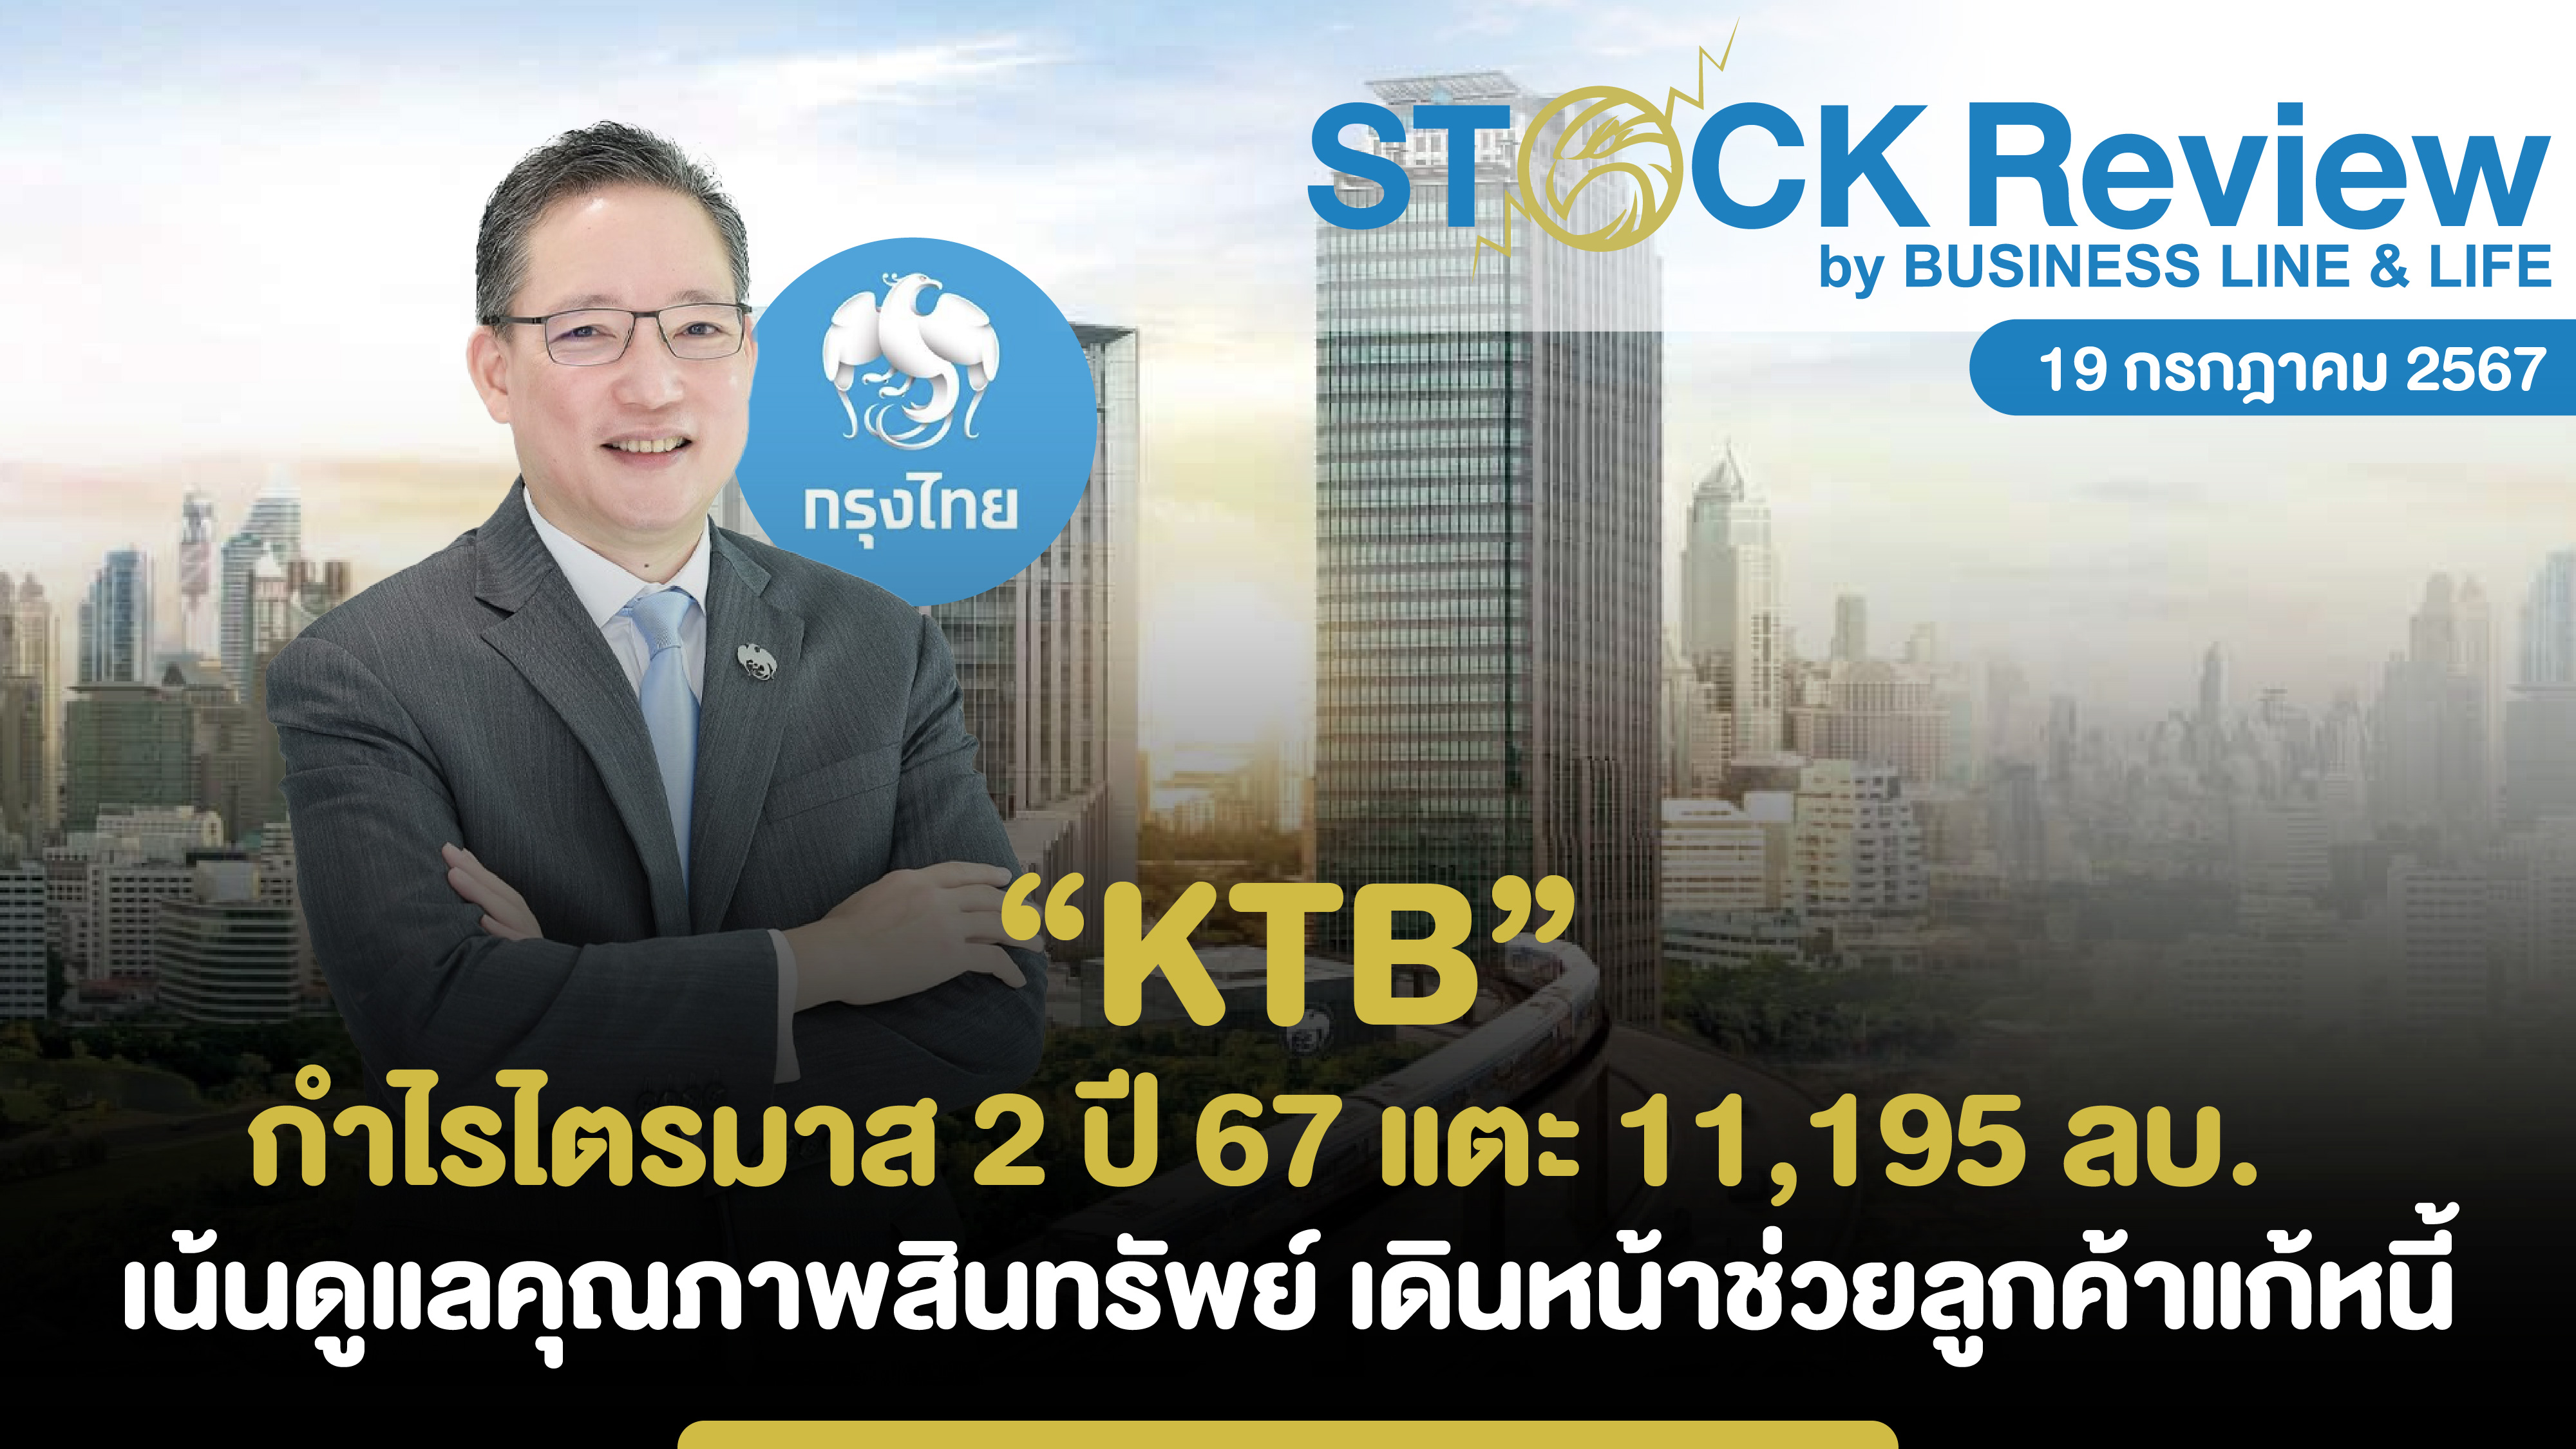 “KTB” กำไรไตรมาส 2 ปี 67 แตะ 11,195 ลบ. เน้นดูแลคุณภาพสินทรัพย์ เดินหน้าช่วยลูกค้าแก้หนี้